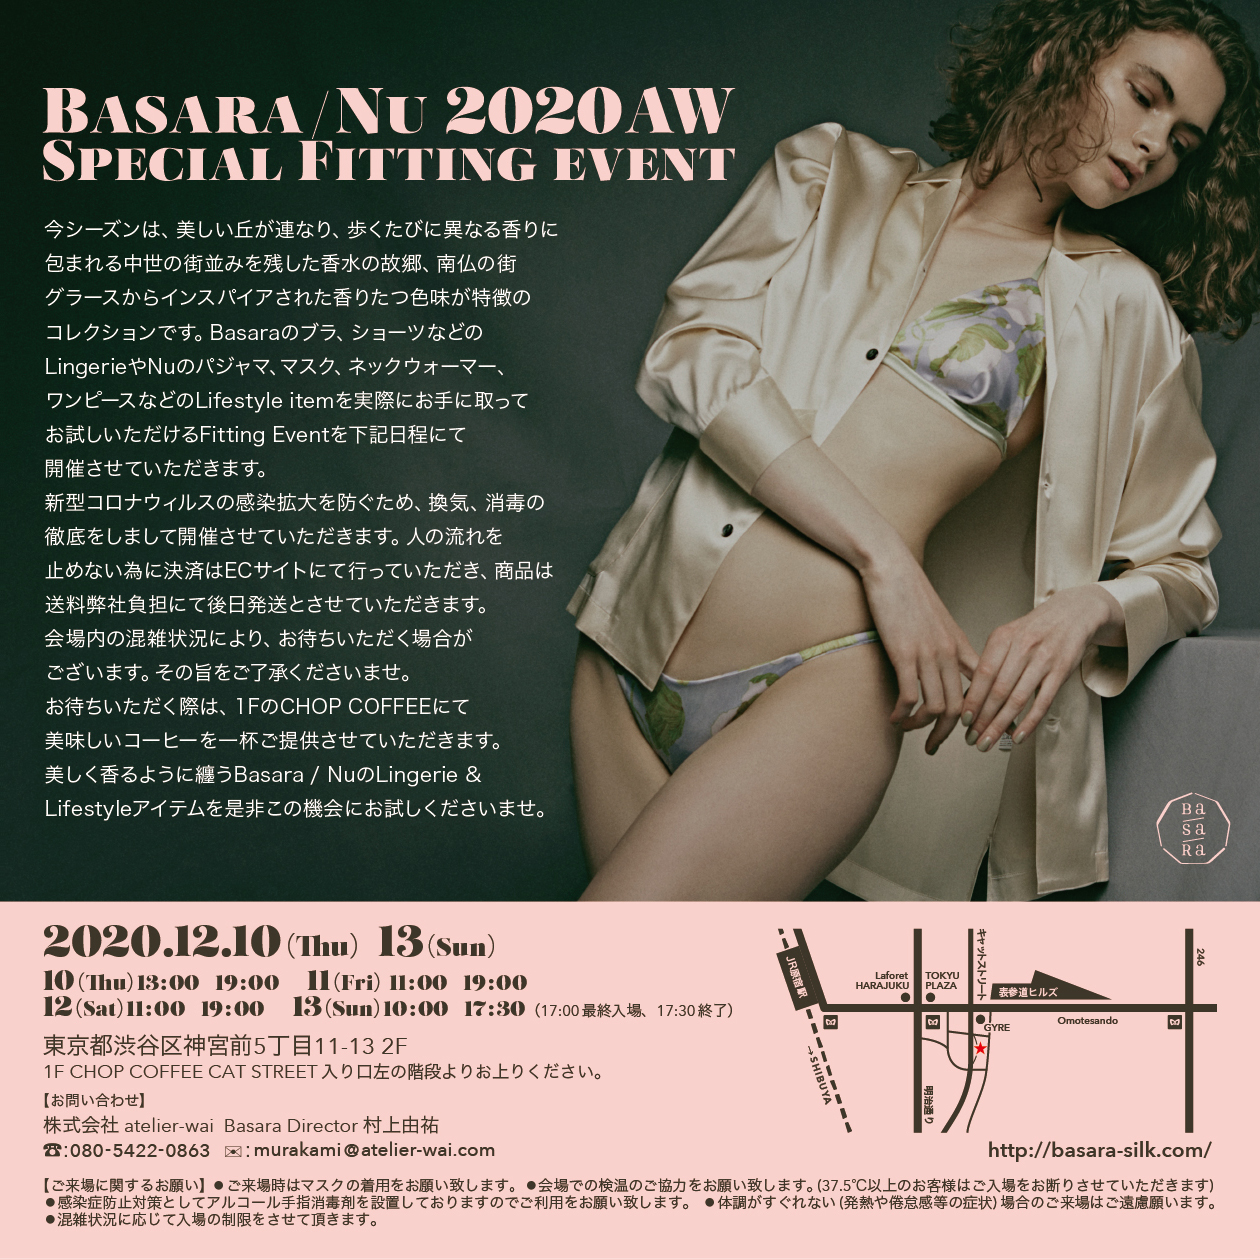 Basara Fitting Event 開催決定!! 12/10[Thu]〜12/13[Sun] 